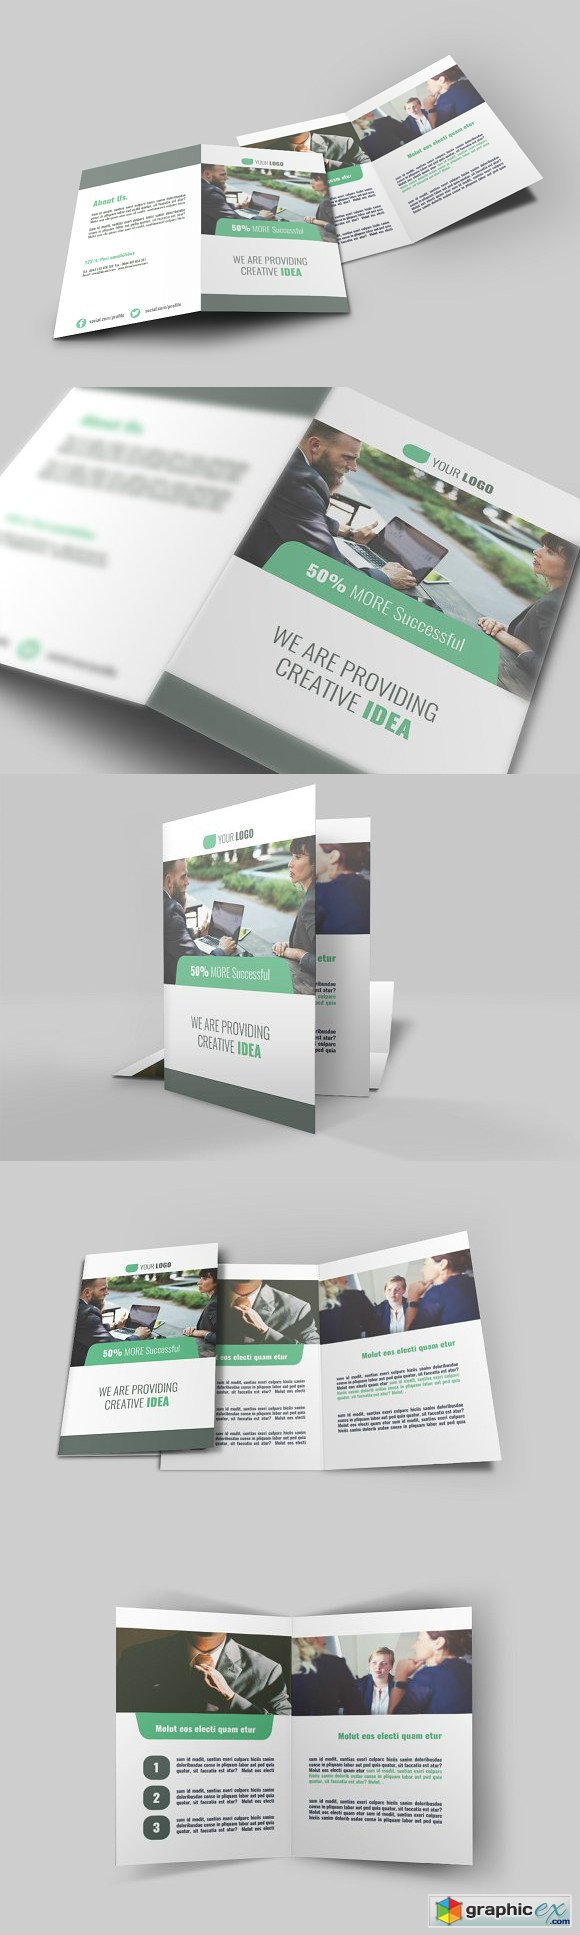 Business Bi Fold Brochure - v009